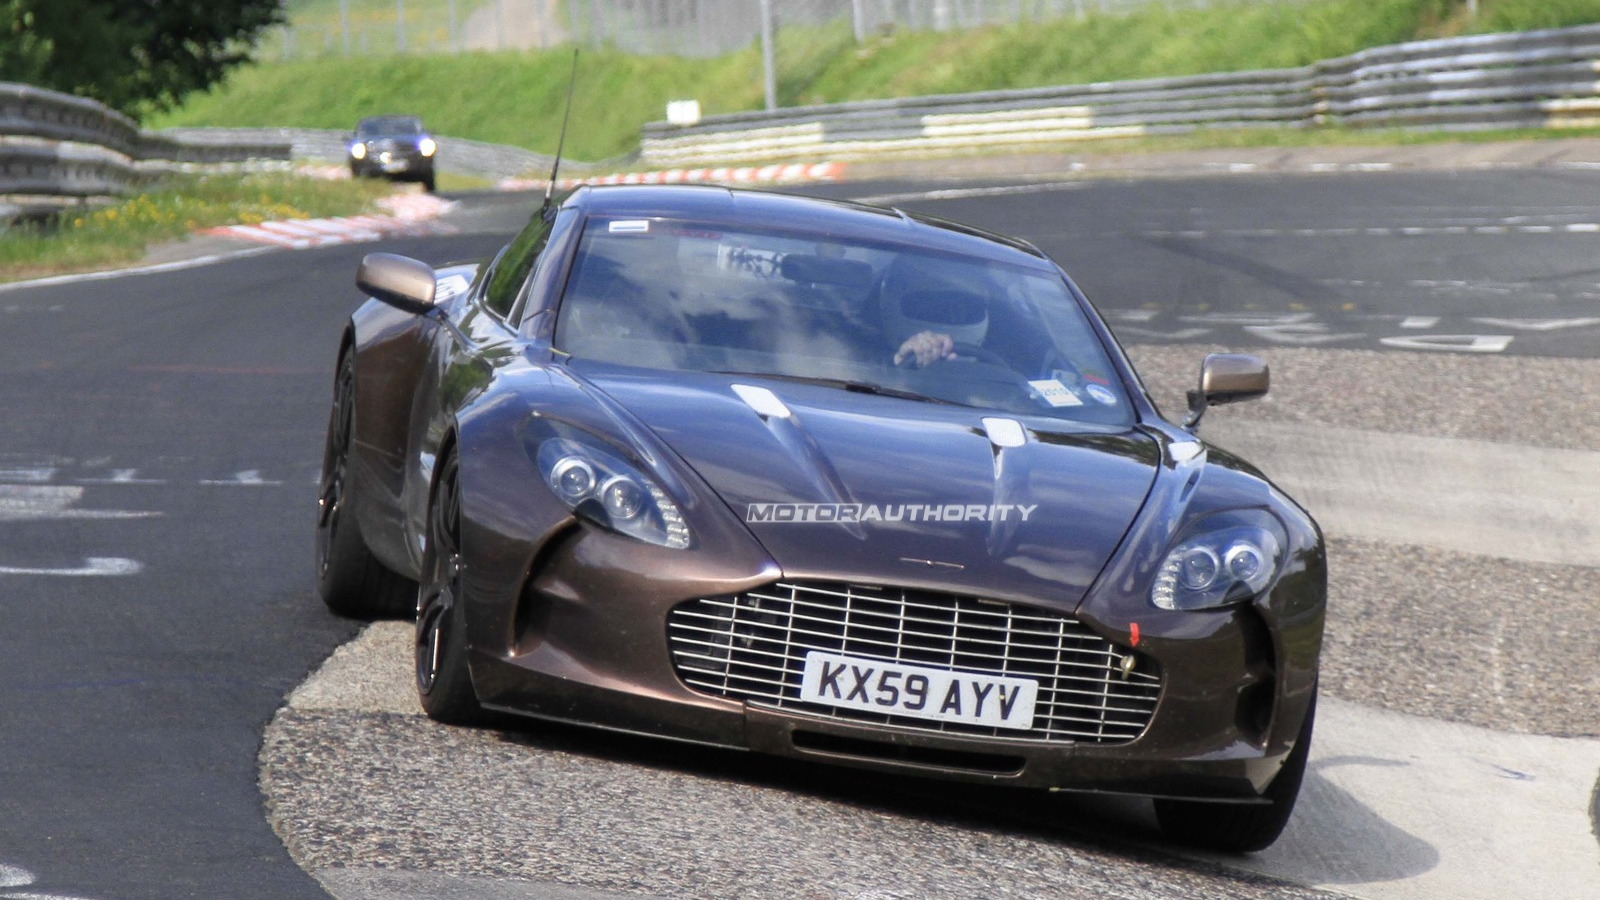 Spy Shots: Aston Martin One-77 testing at the Nurburgring